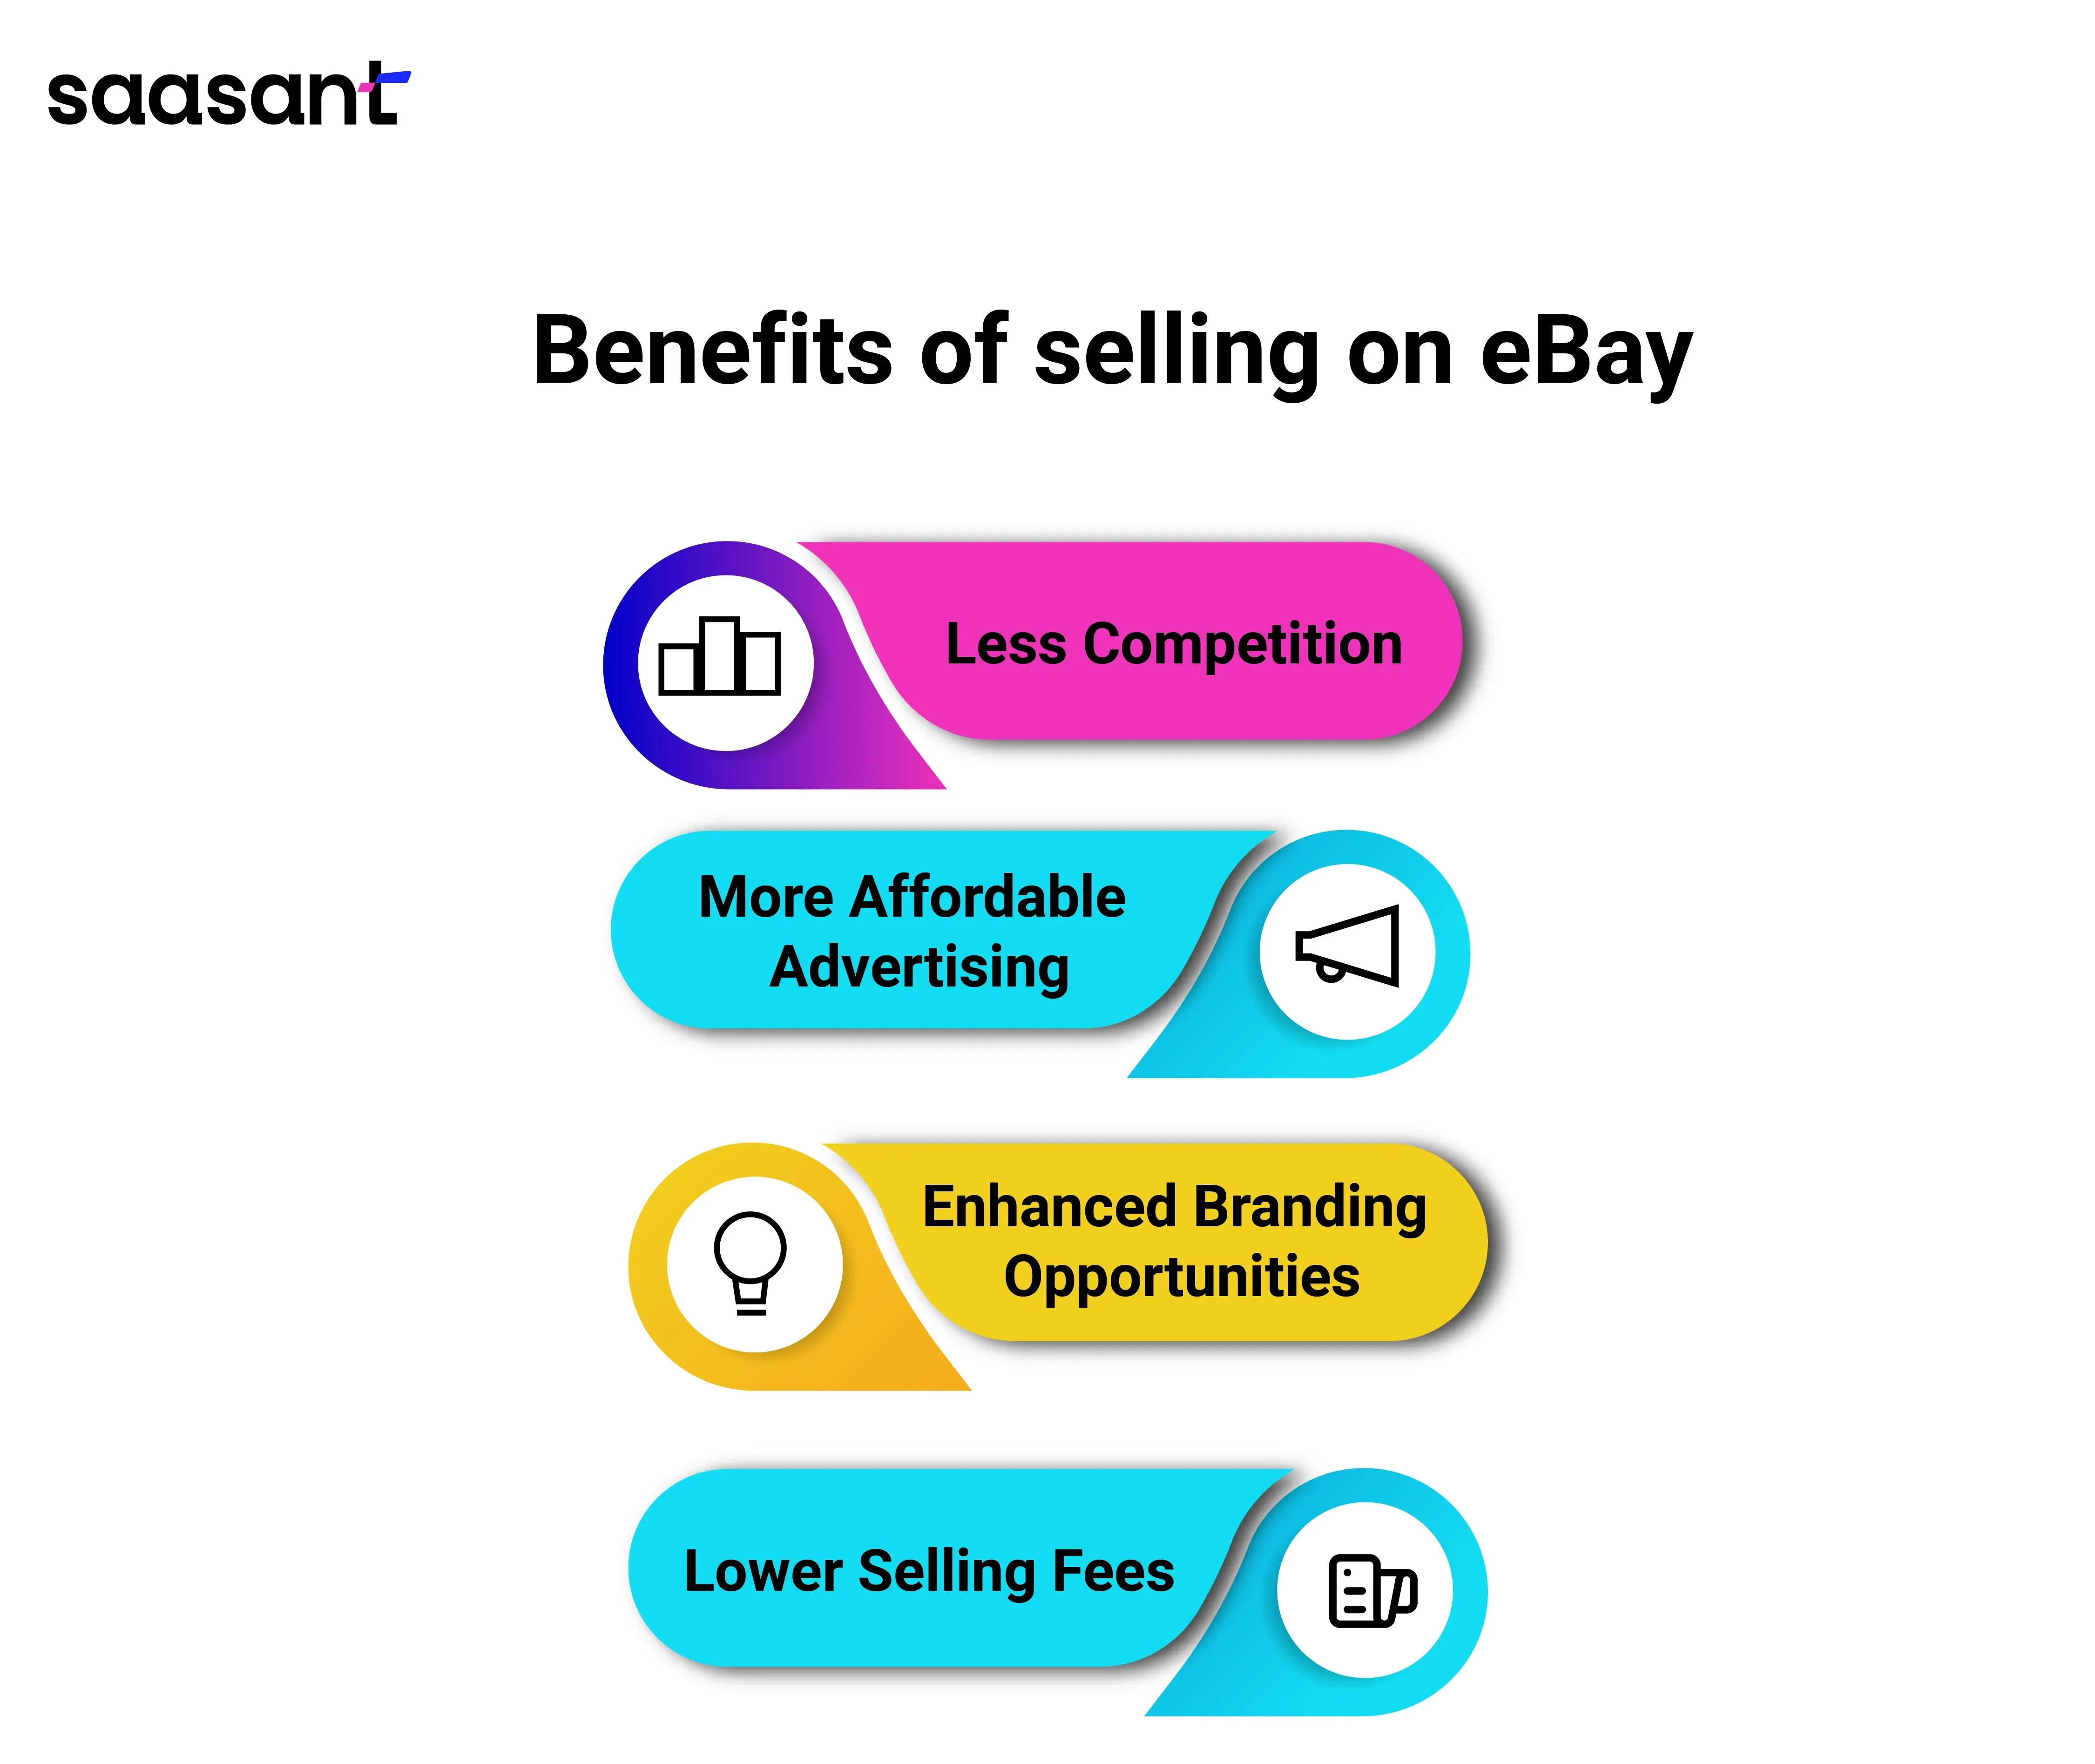 Benefits of selling on eBay